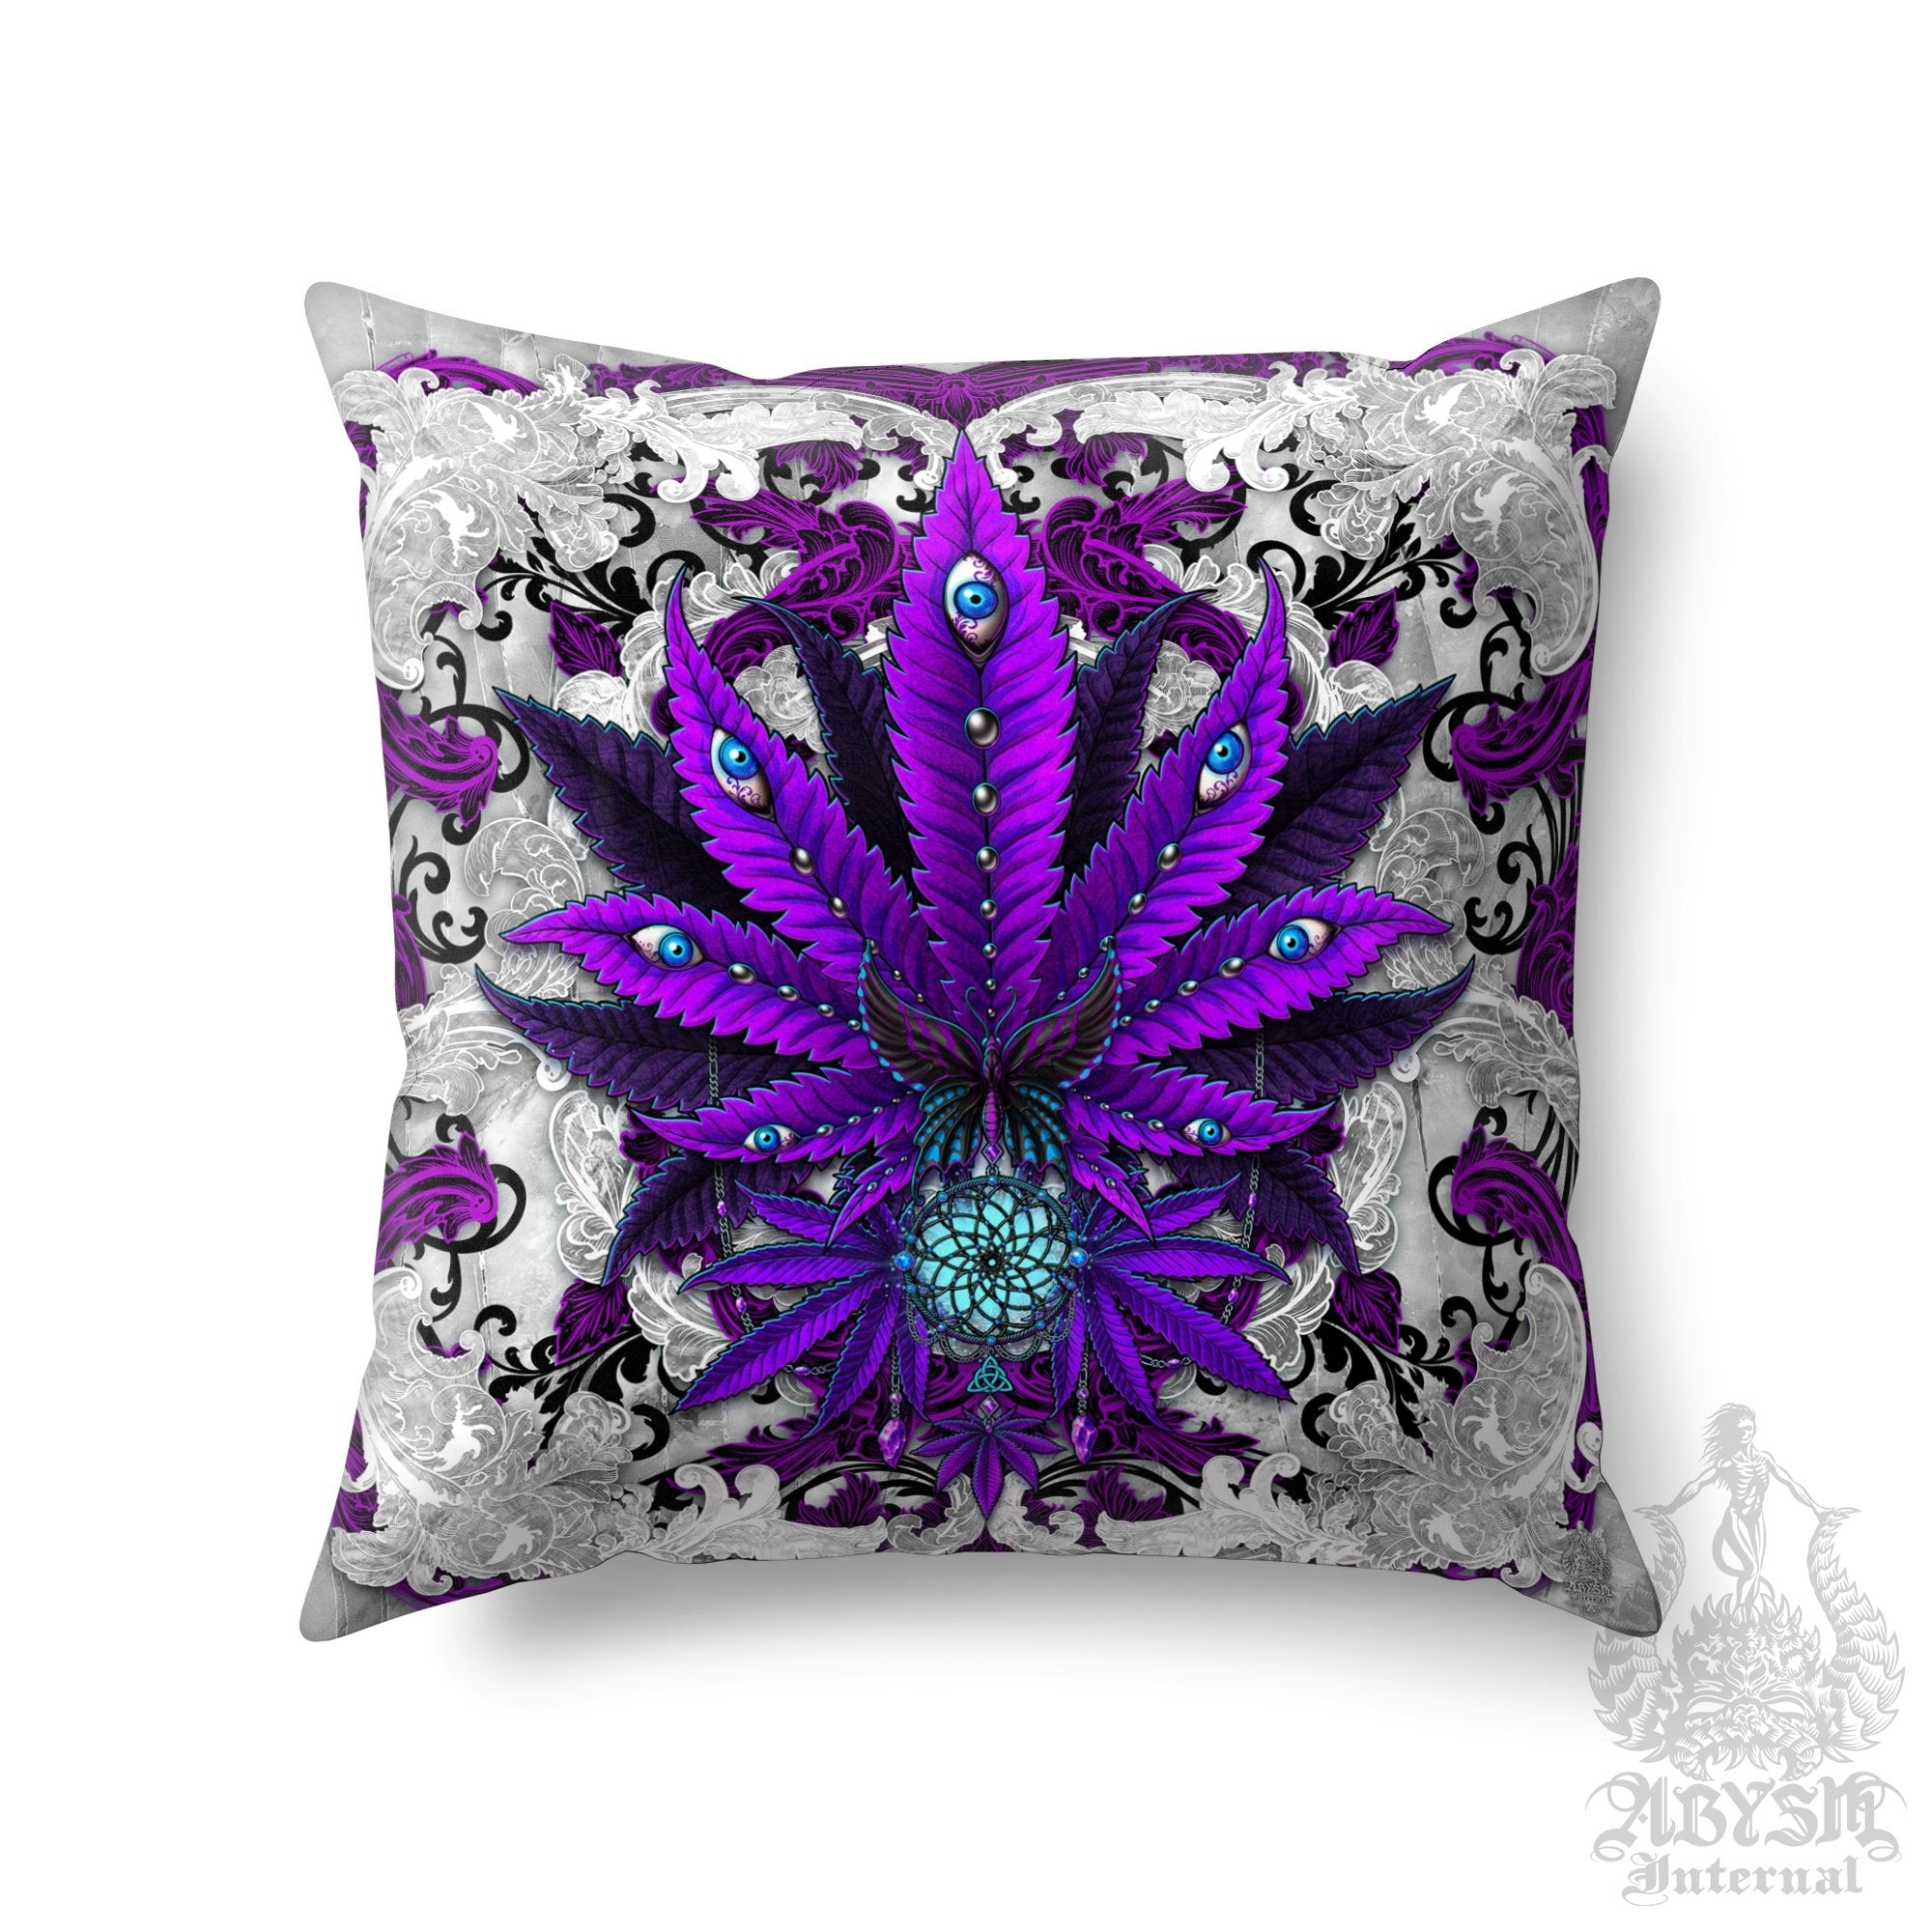 Weed Throw Pillow, Cannabis Shop Decor, Decorative Accent Cushion, Alternative Room Decor, 420 Art Print - Purple White Goth - Abysm Internal